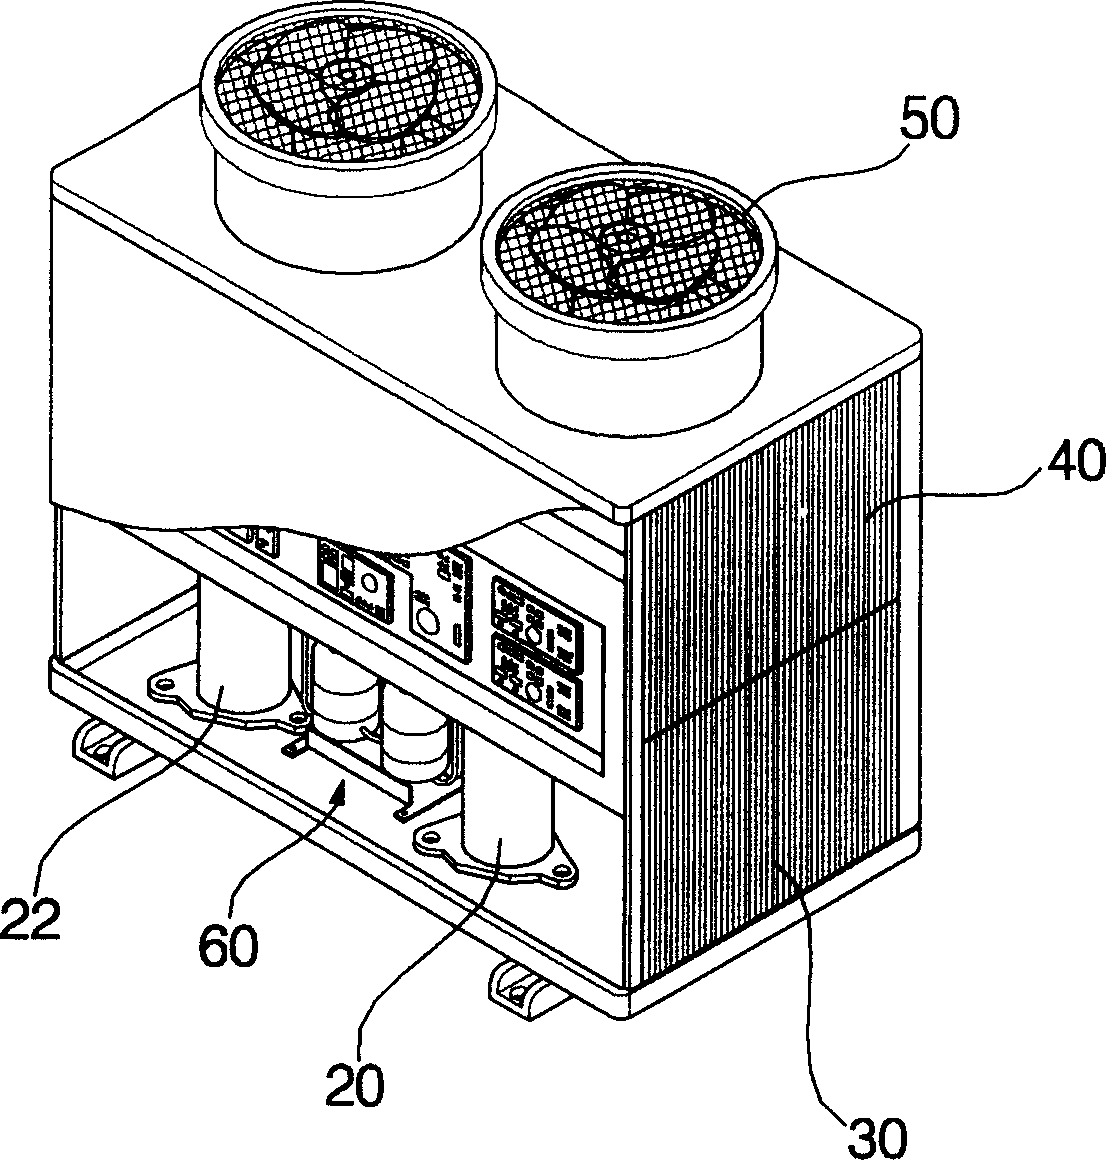 Liquid storing tank for air conditioner